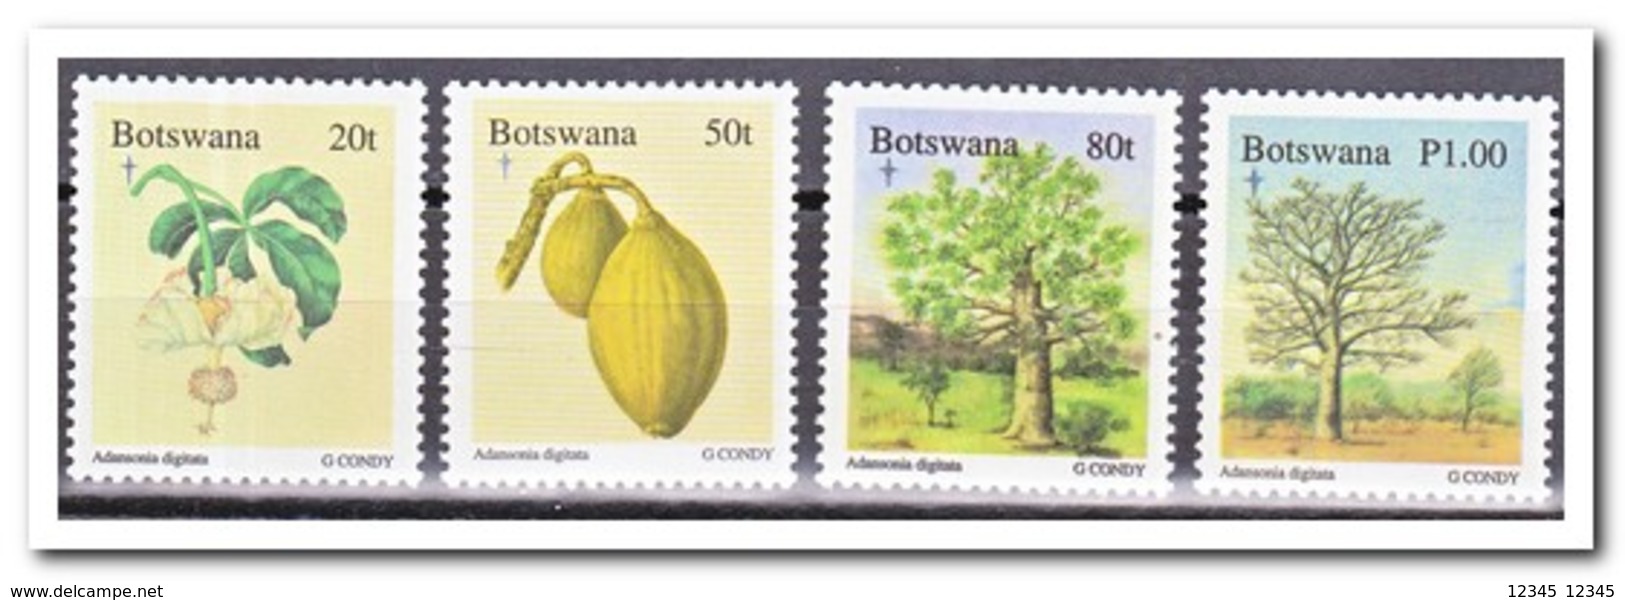 Botswana 1996, Postfris MNH, Trees - Botswana (1966-...)